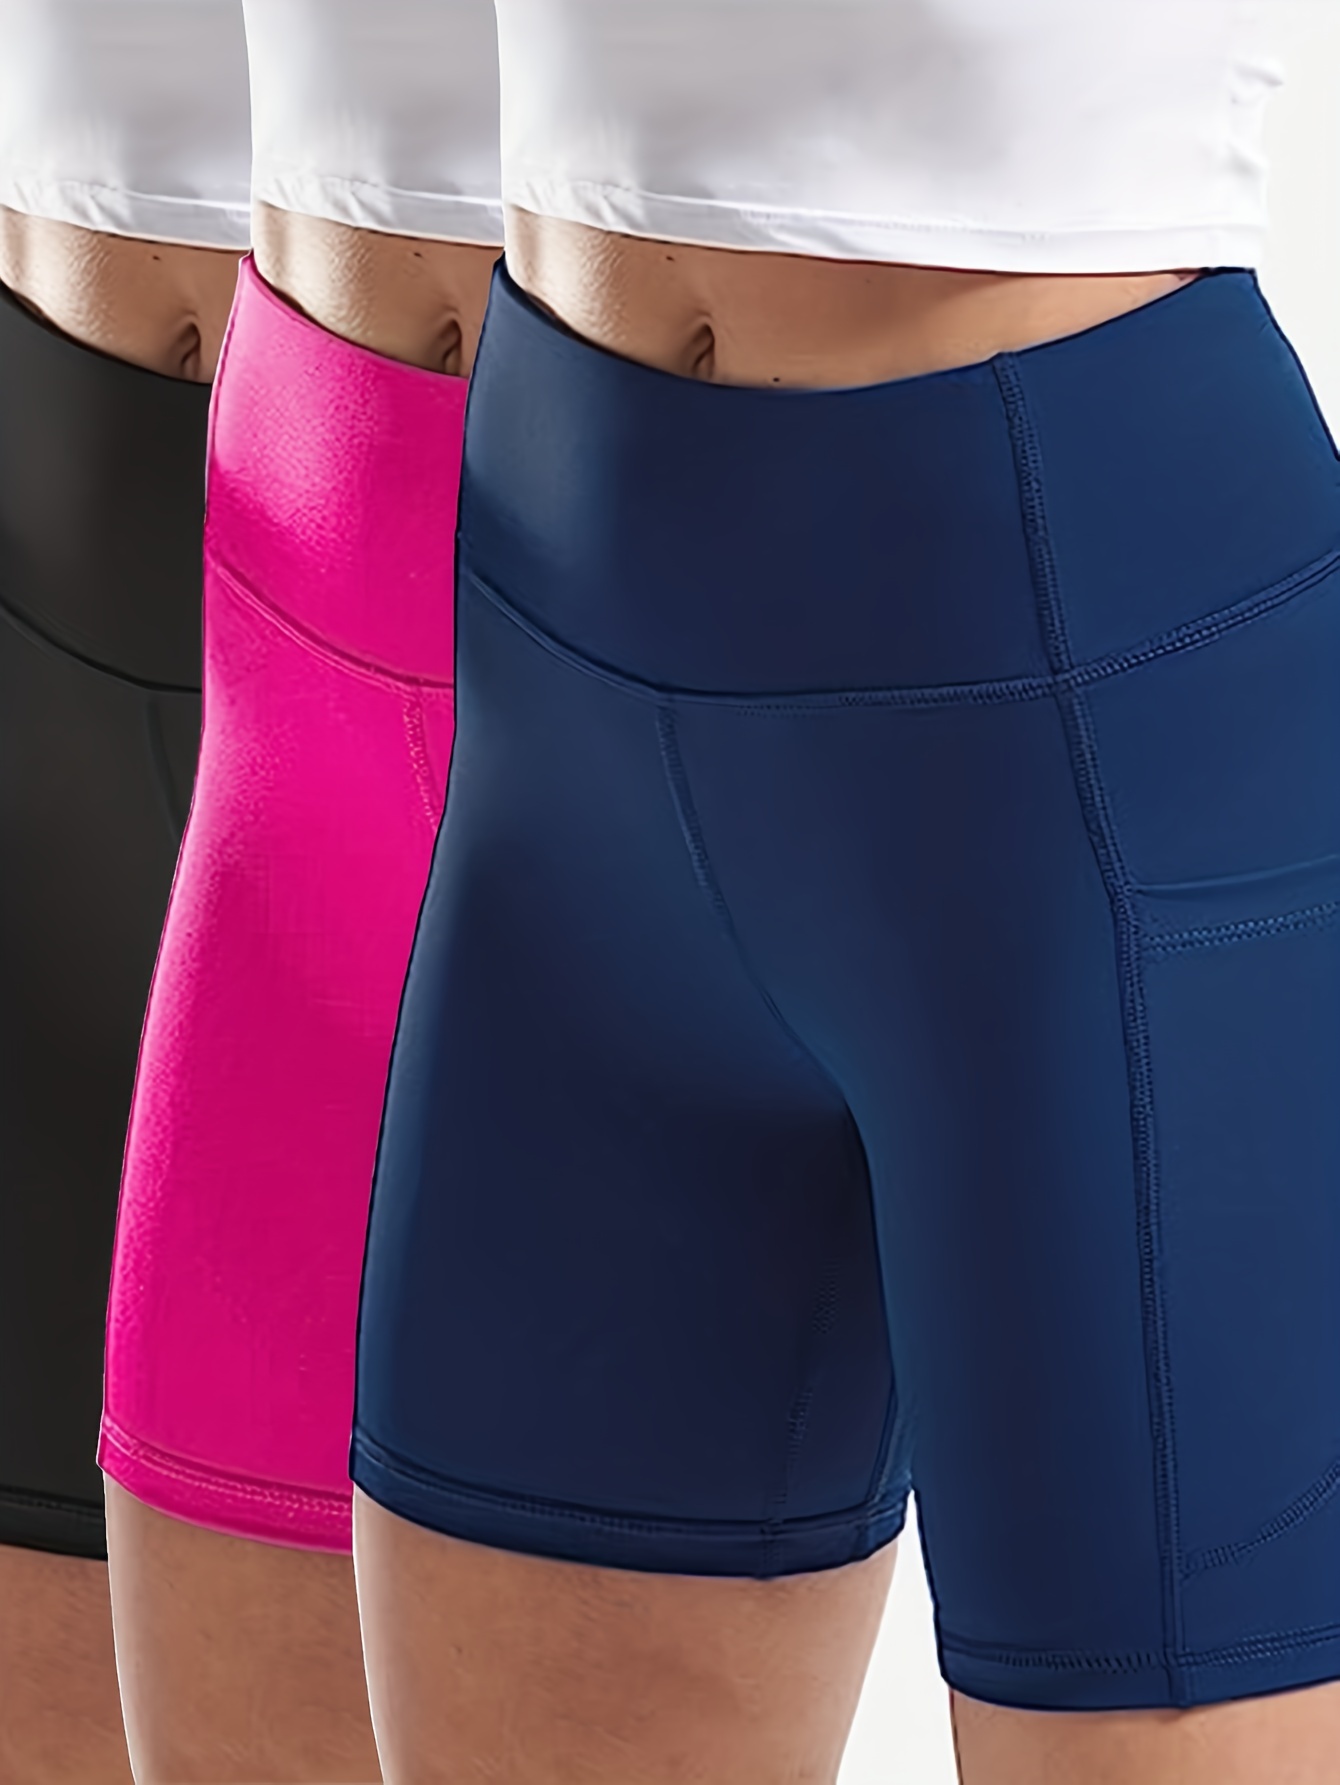 MRULIC yoga shorts for women Women's Fashion Solid Color High